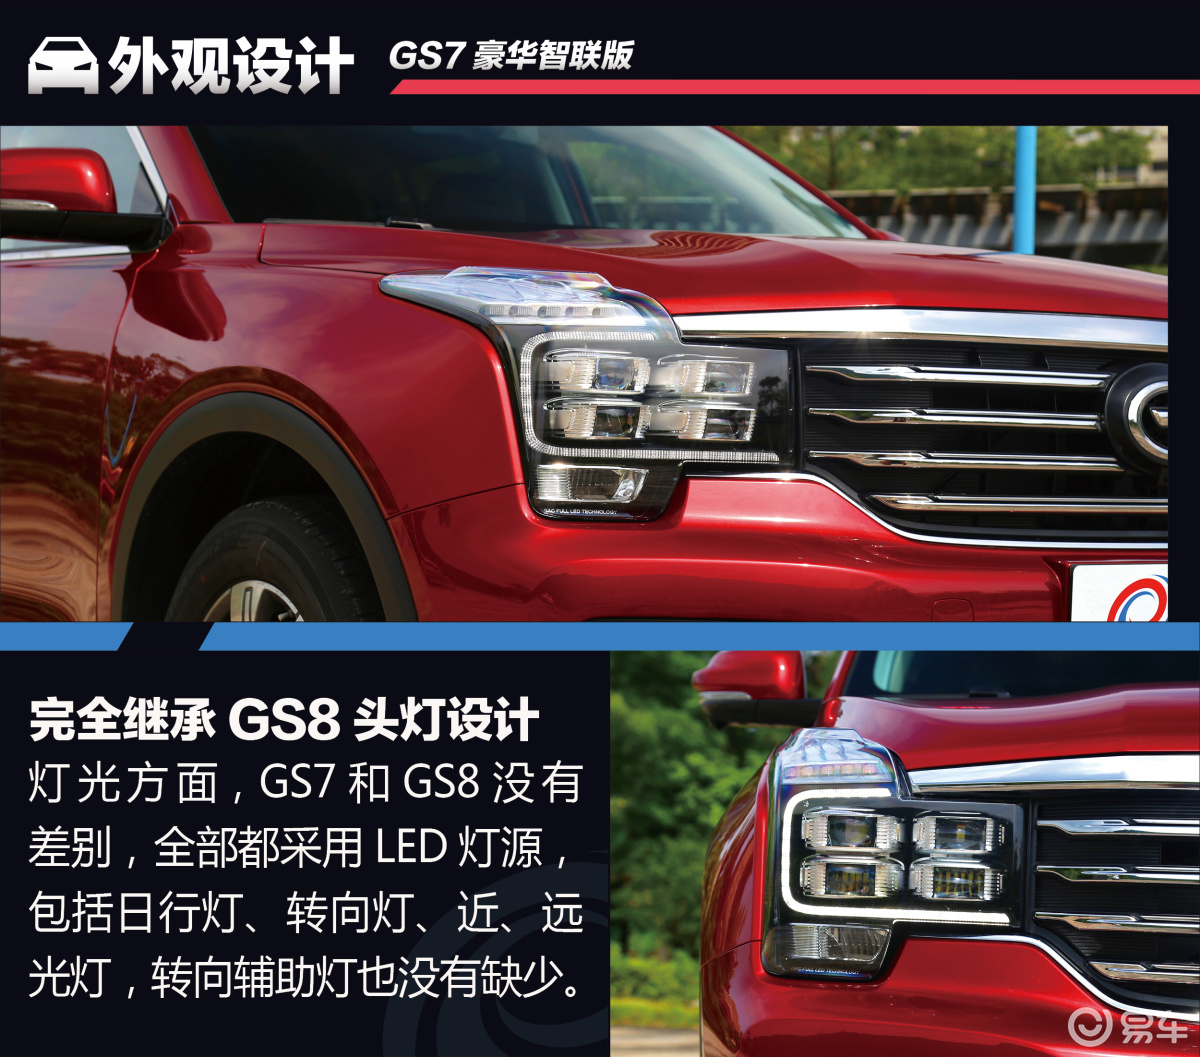 GS7 图解-红色